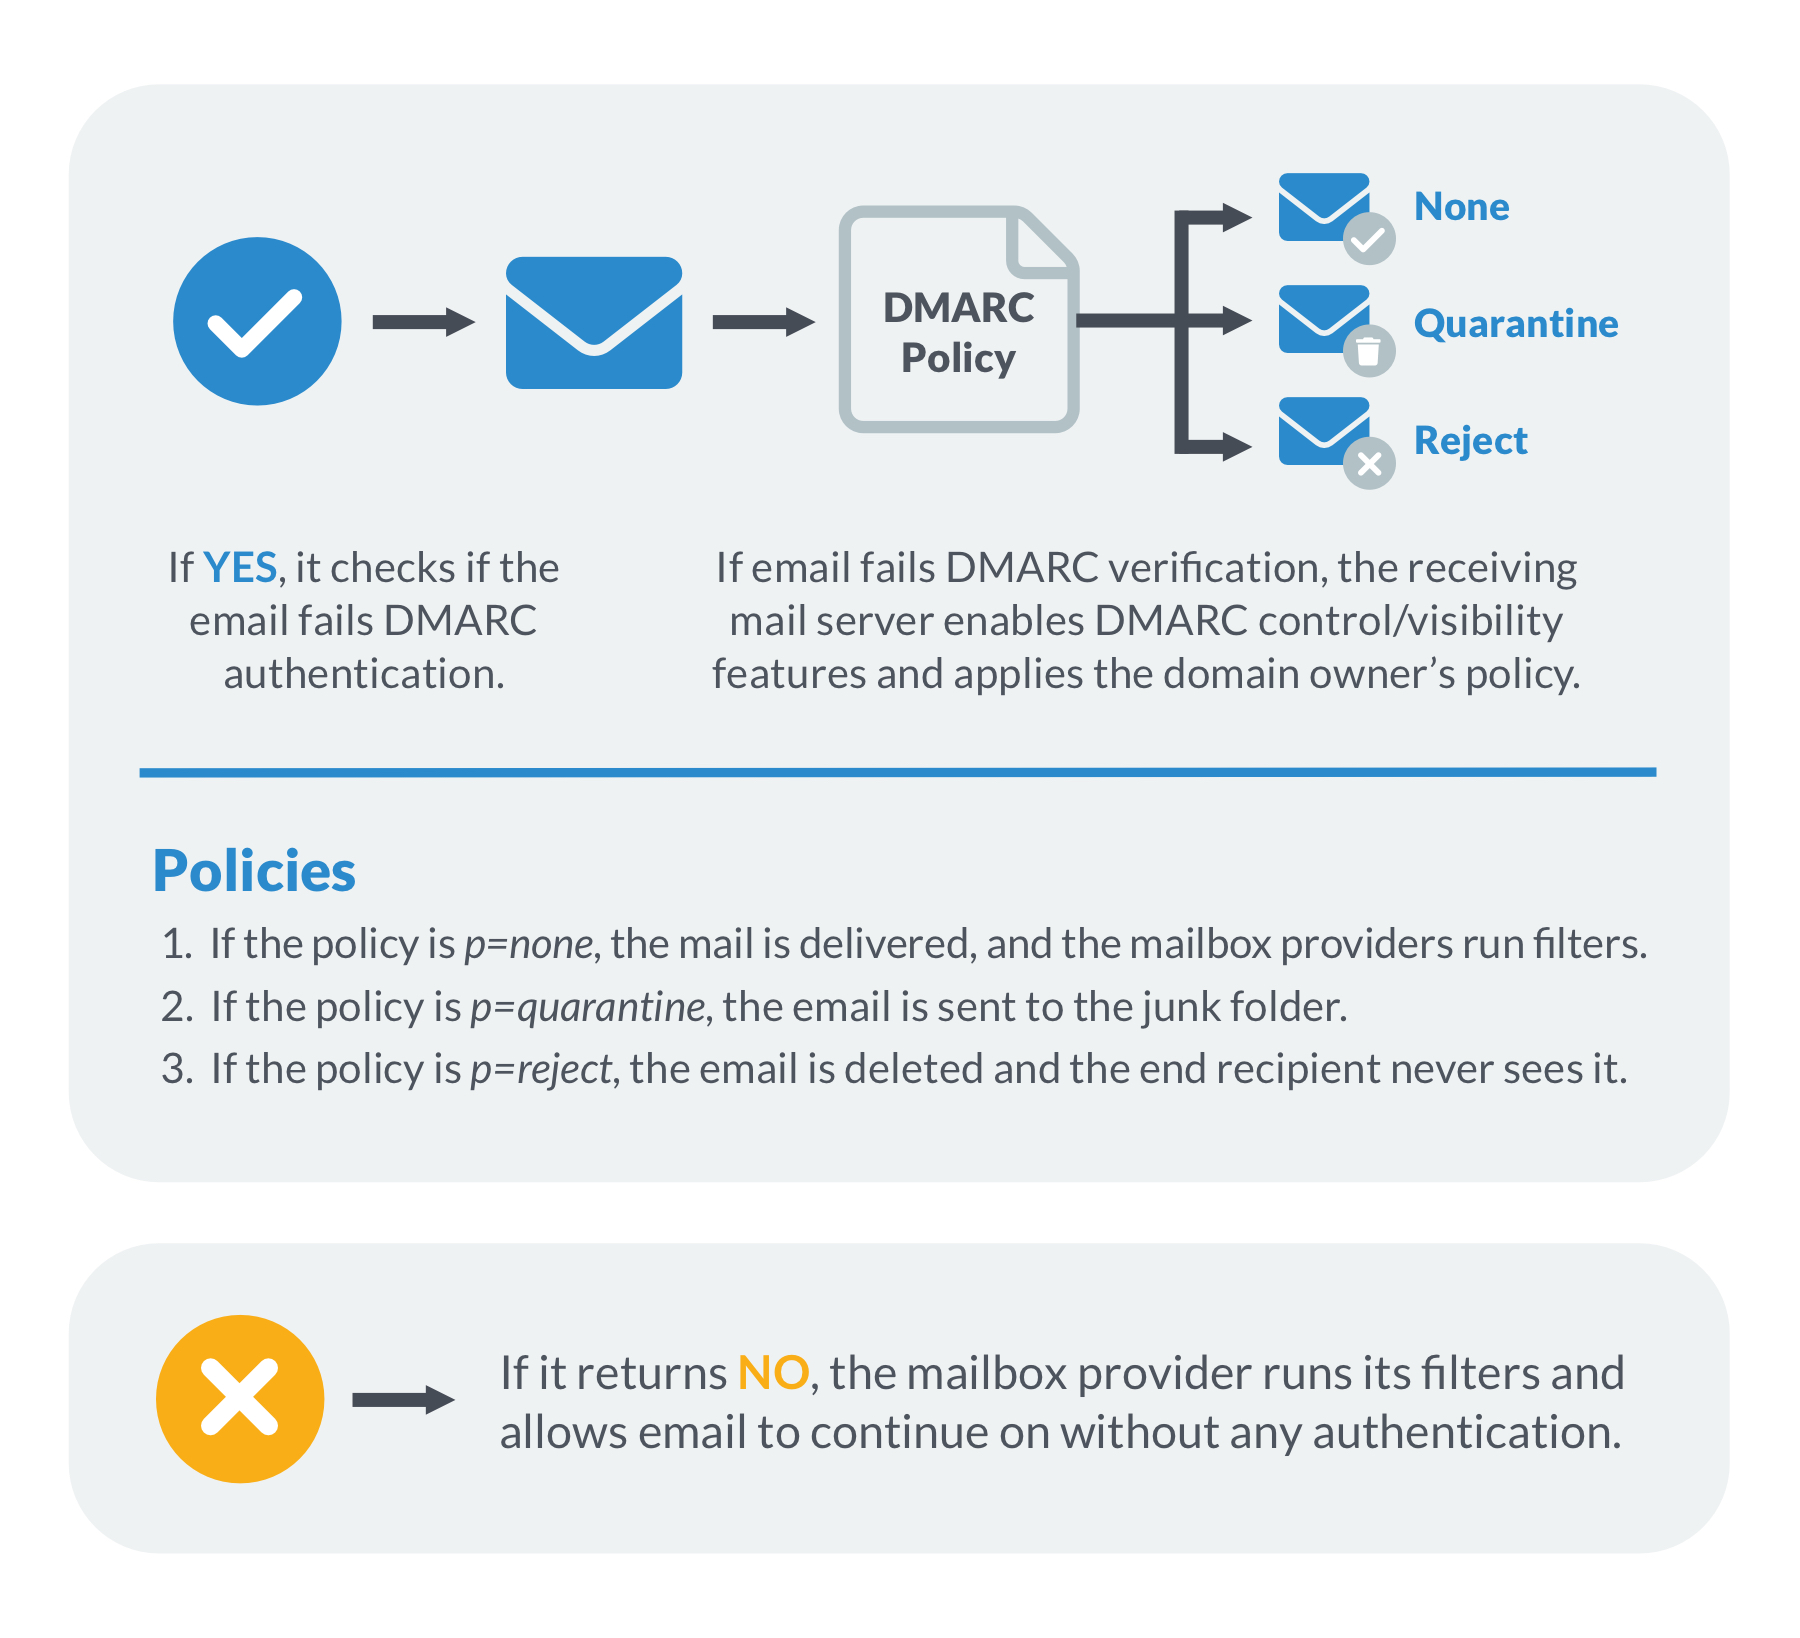 3 ways DMARC authenticates email